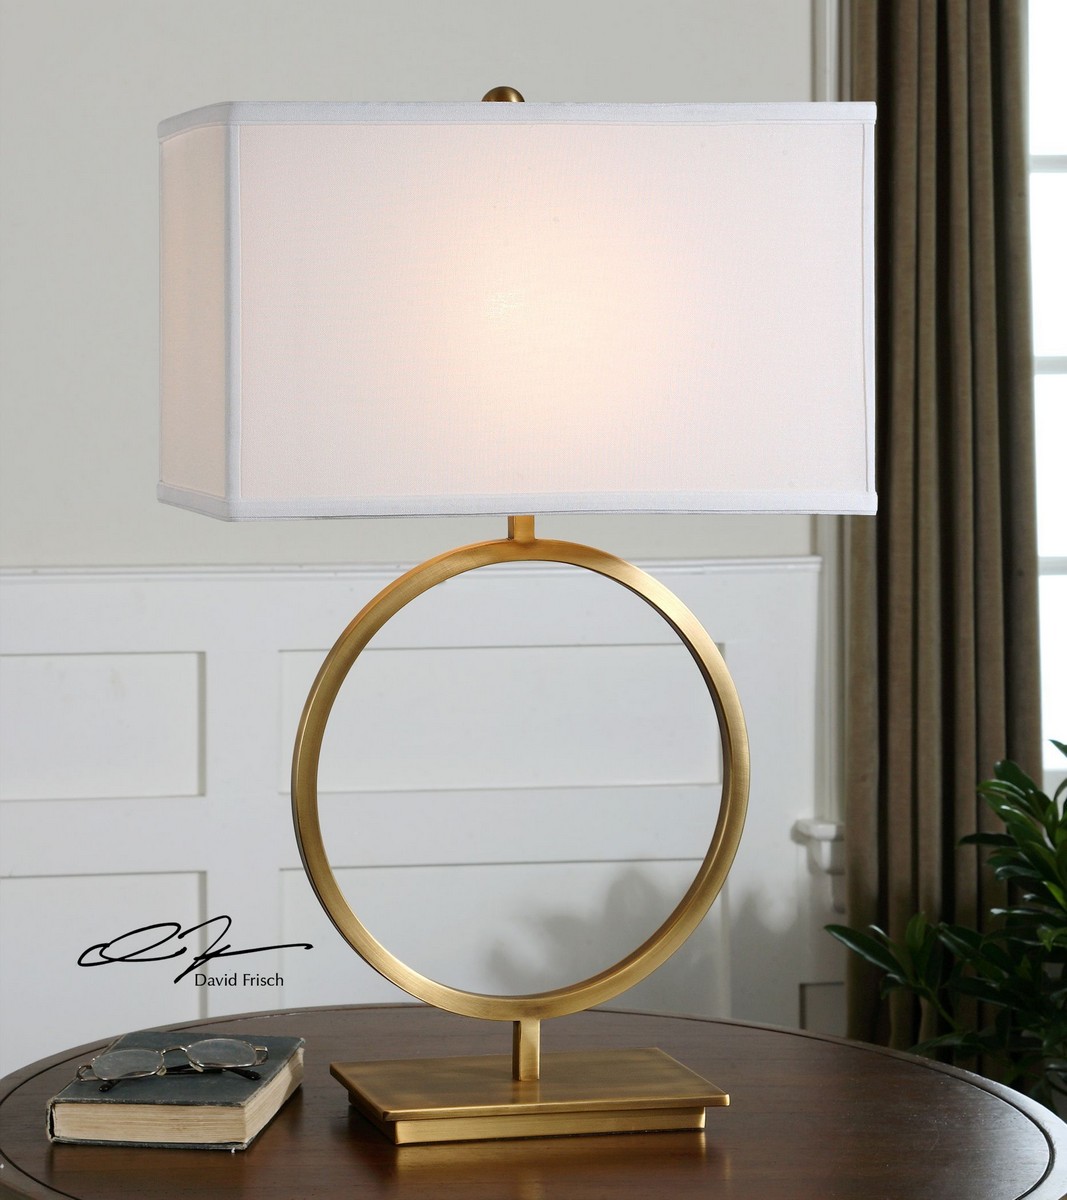 Uttermost Duara Circle Table Lamp